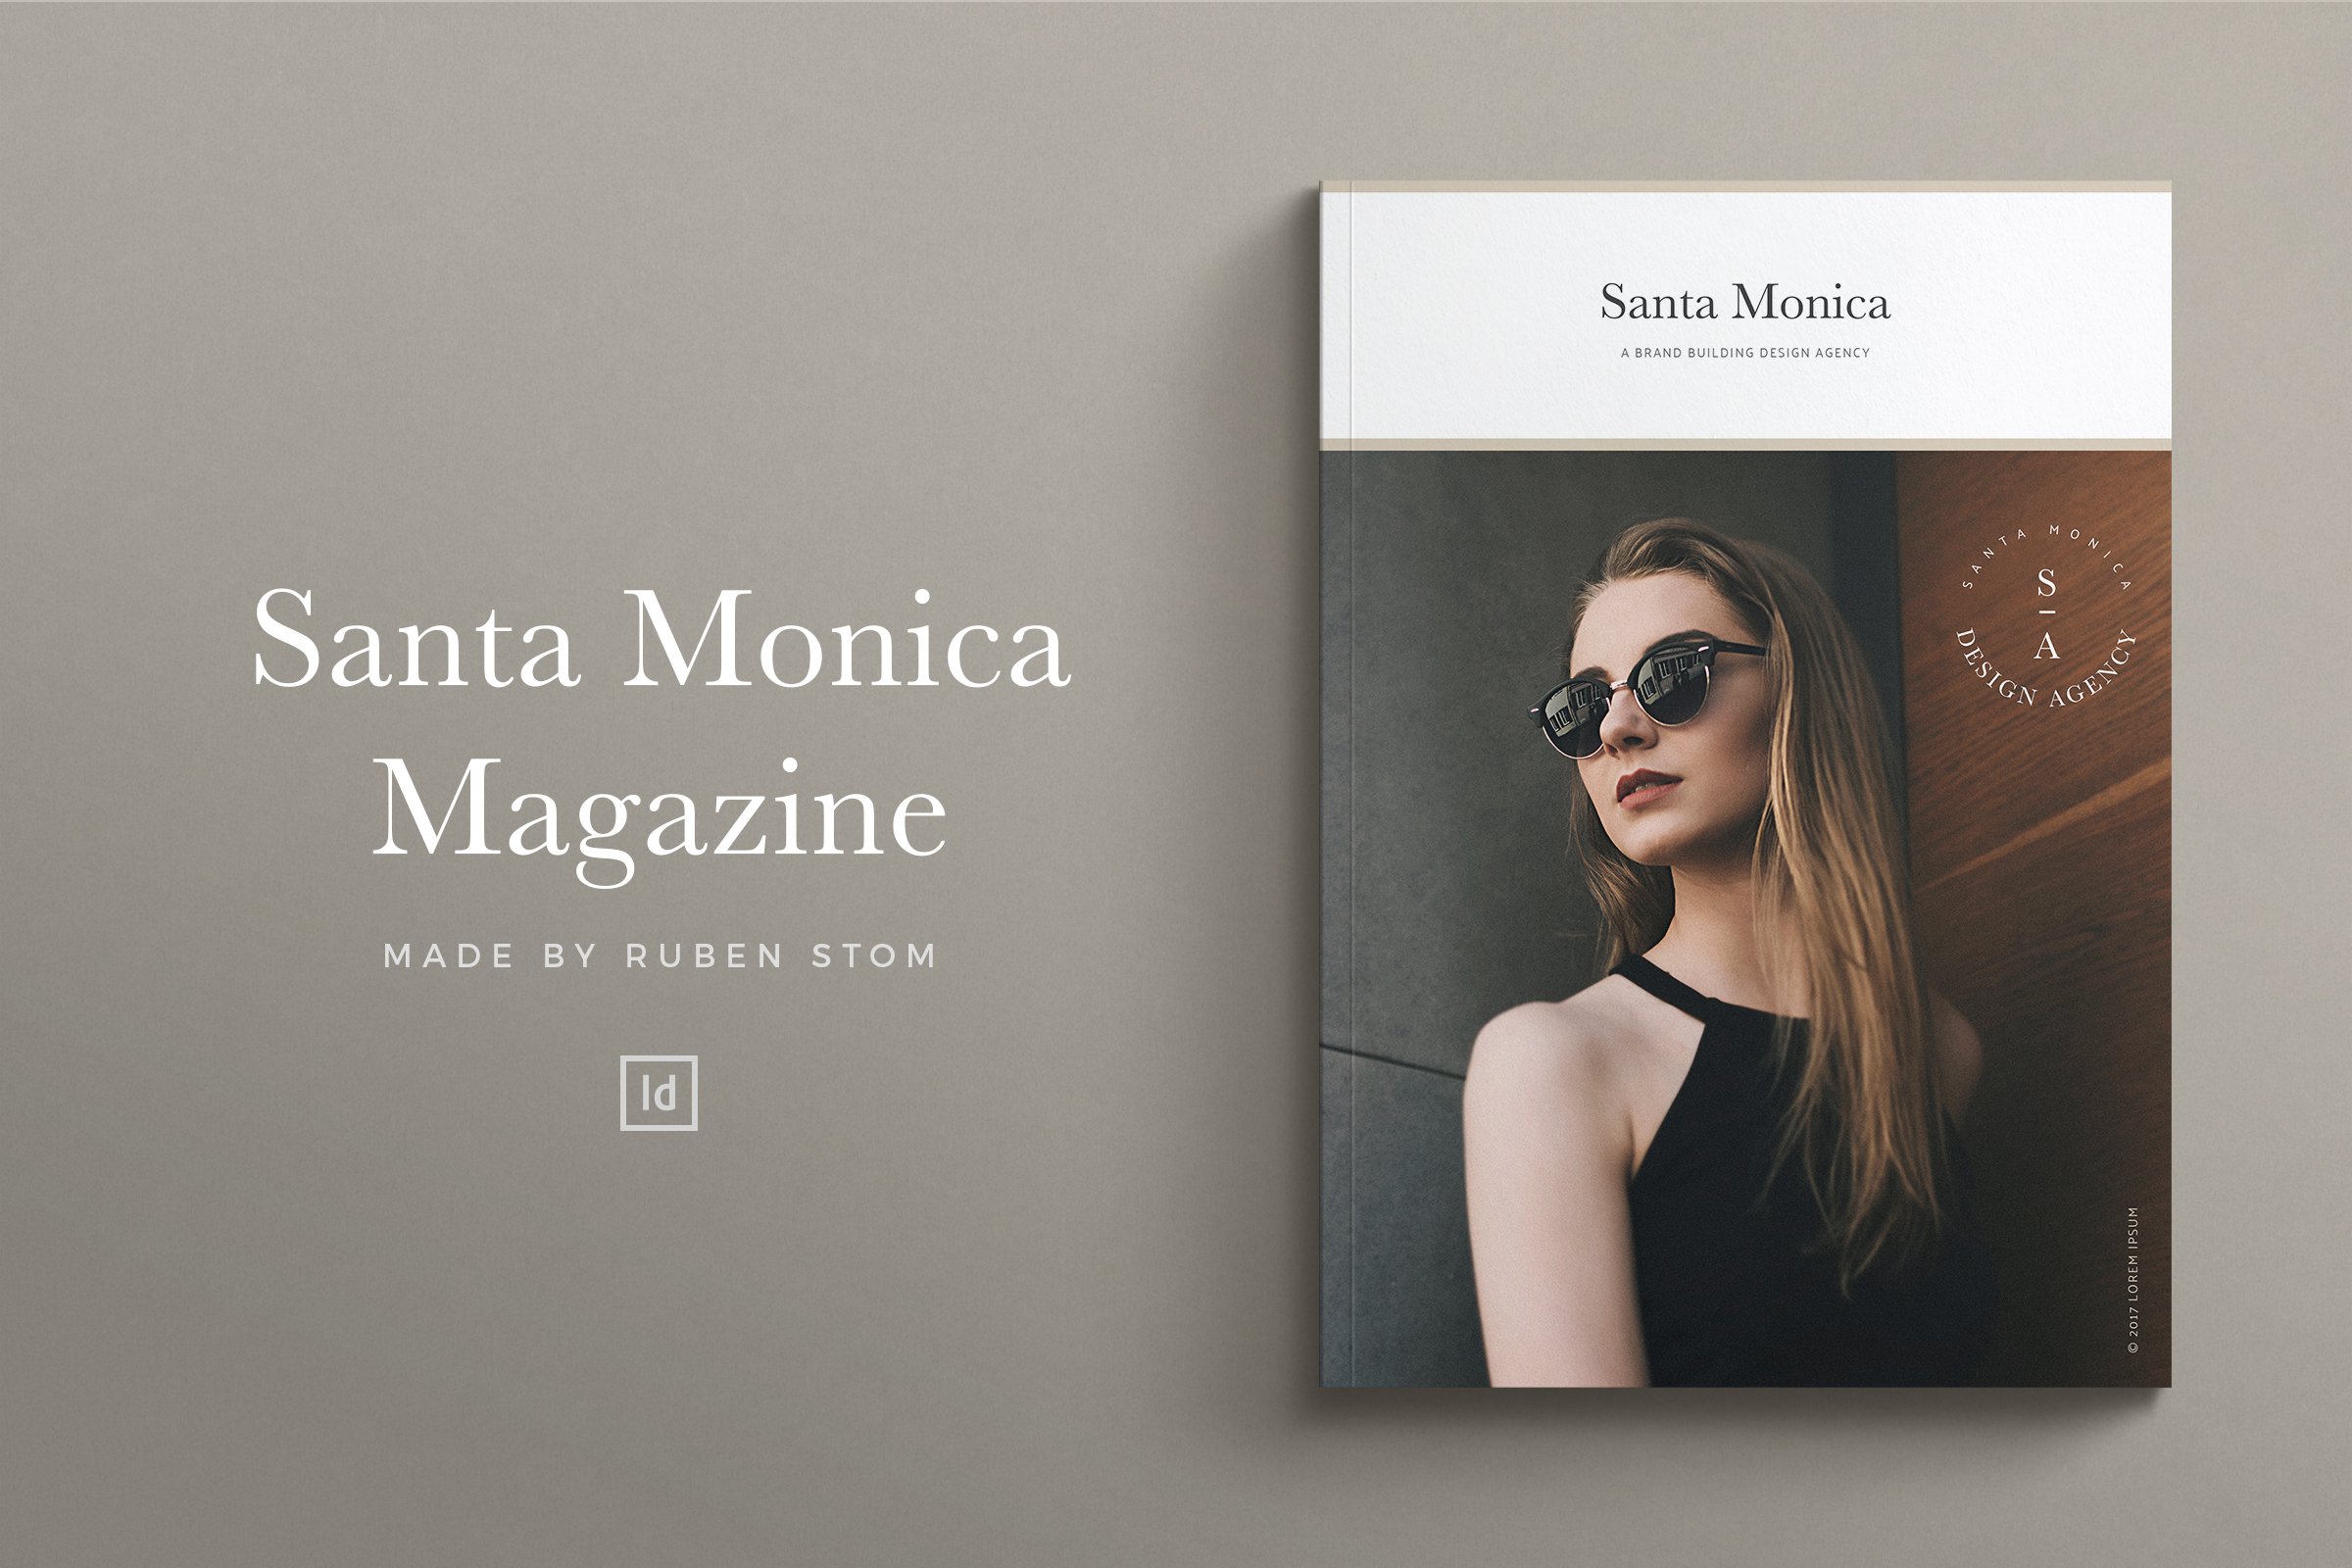 Santa Monica Magazine cover image.